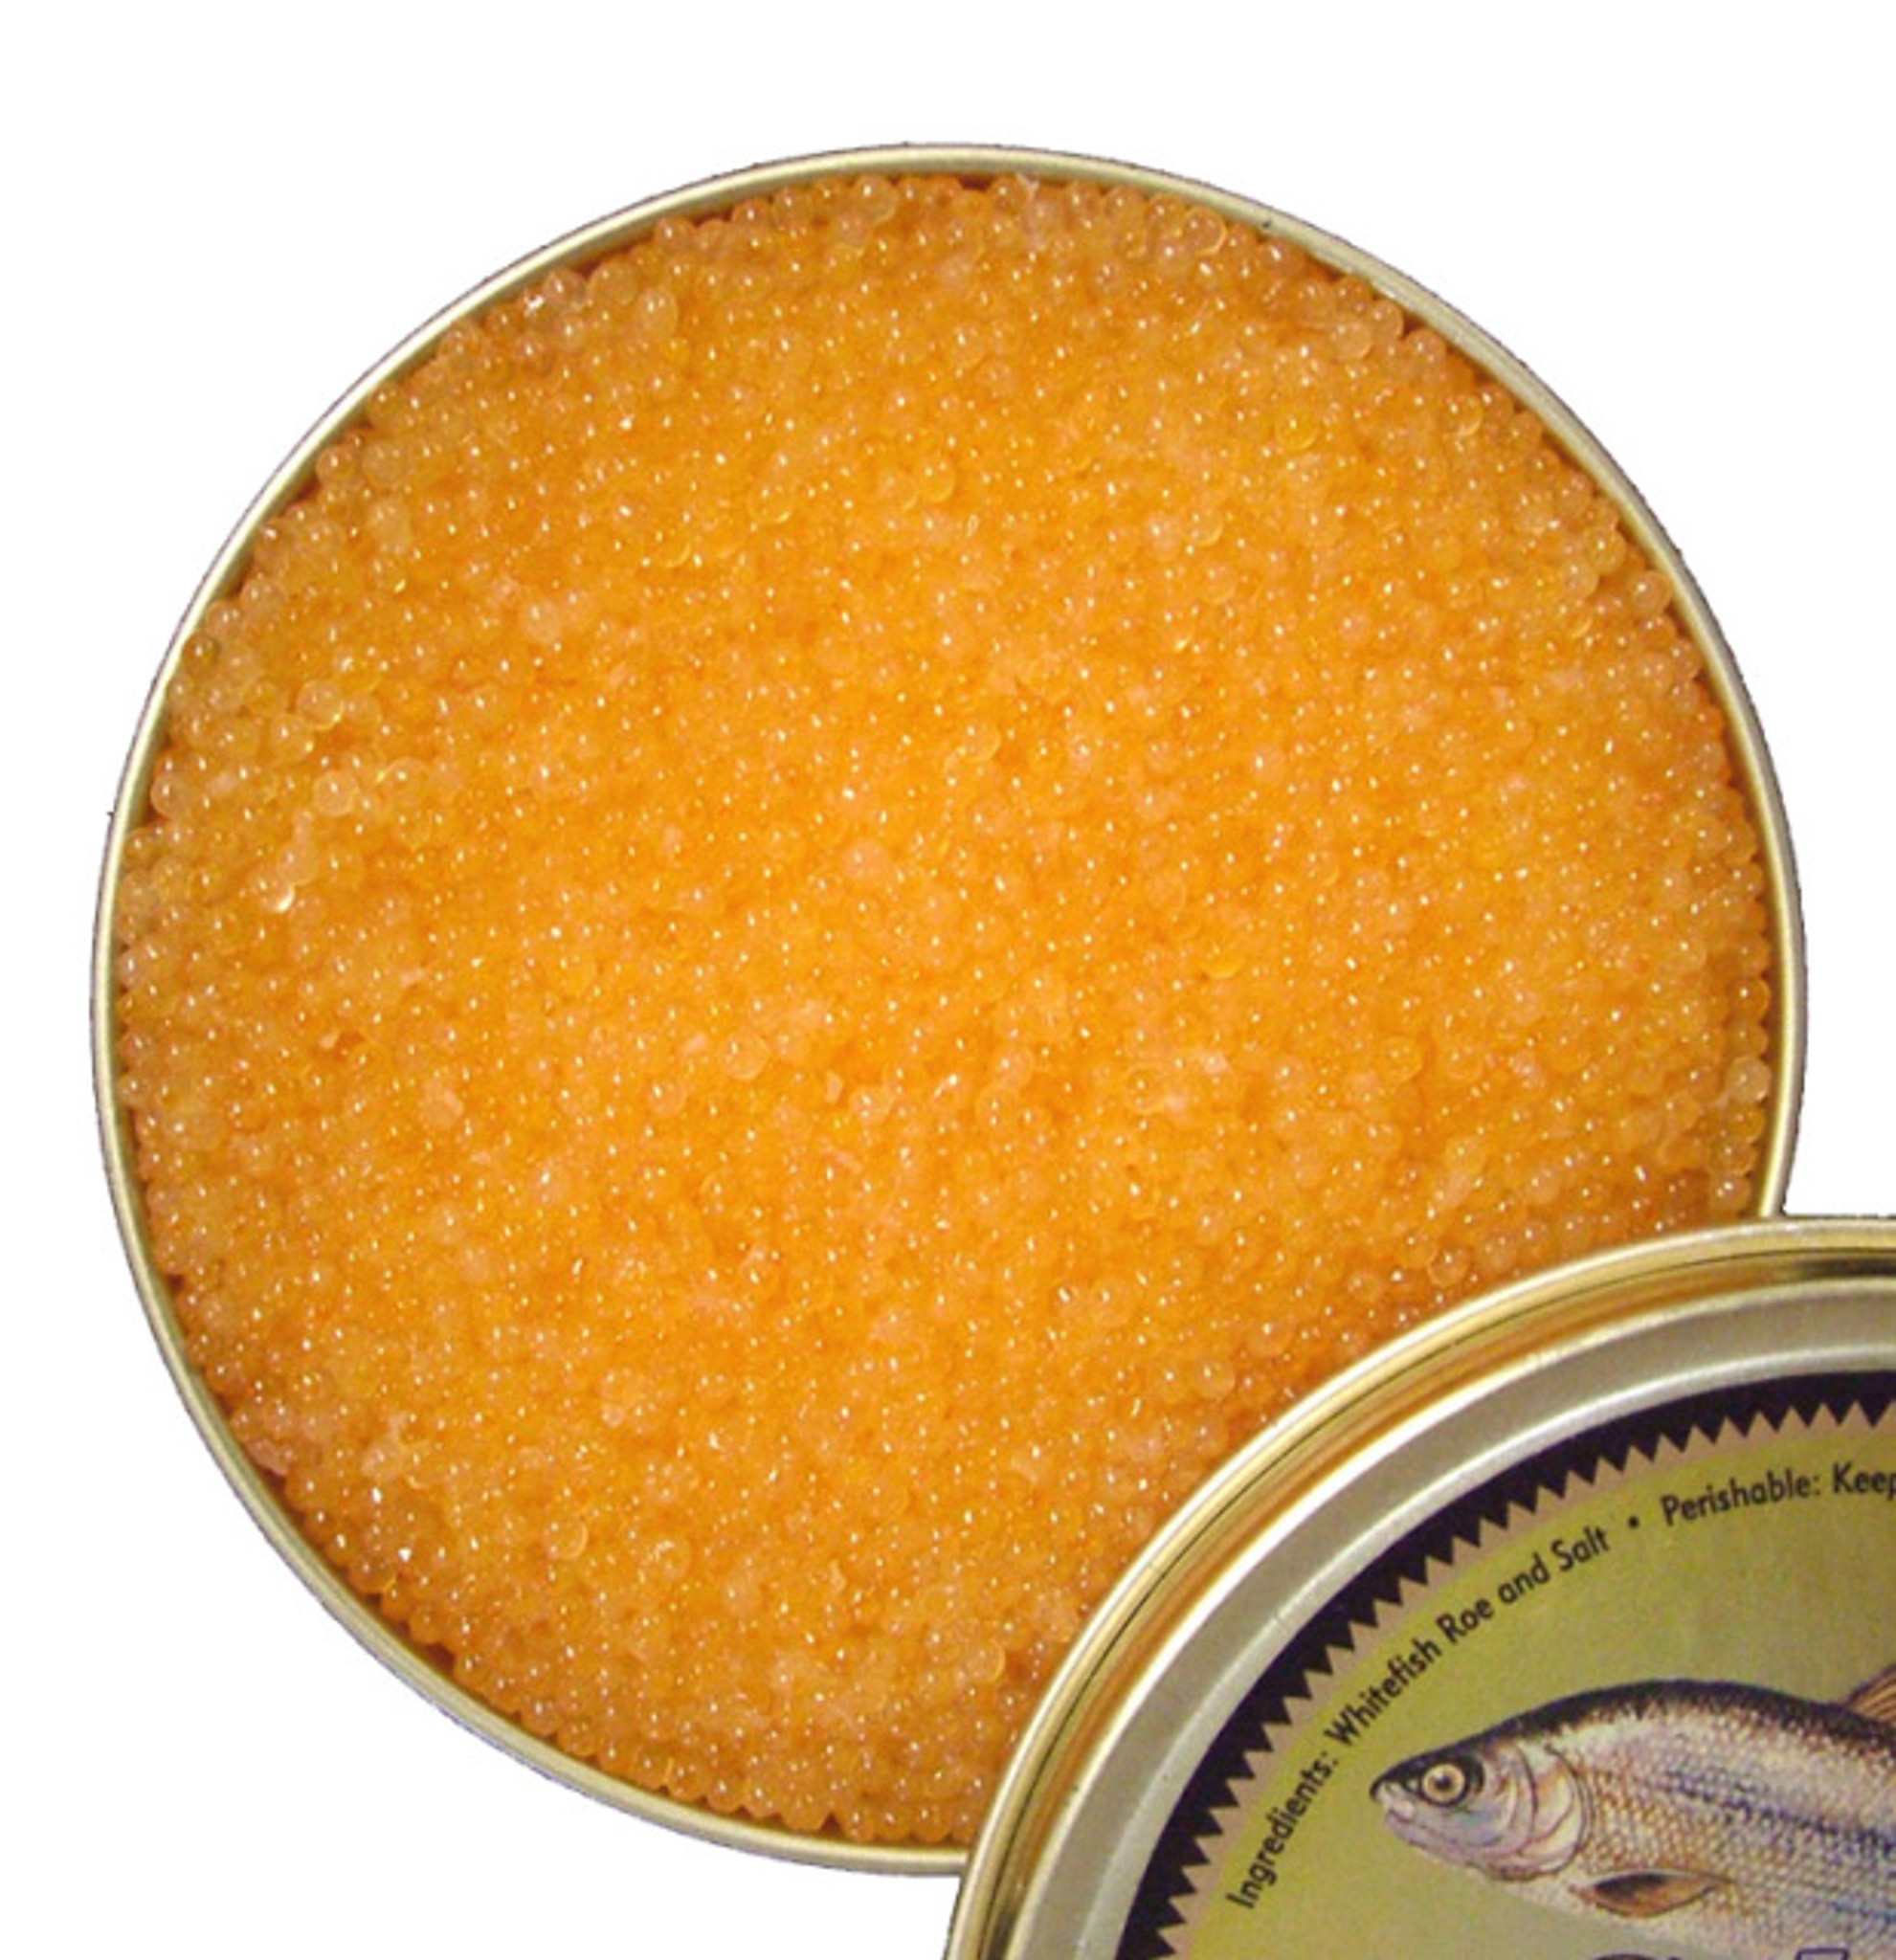 Golden Whitefish Caviar, Wild American Fish Roe